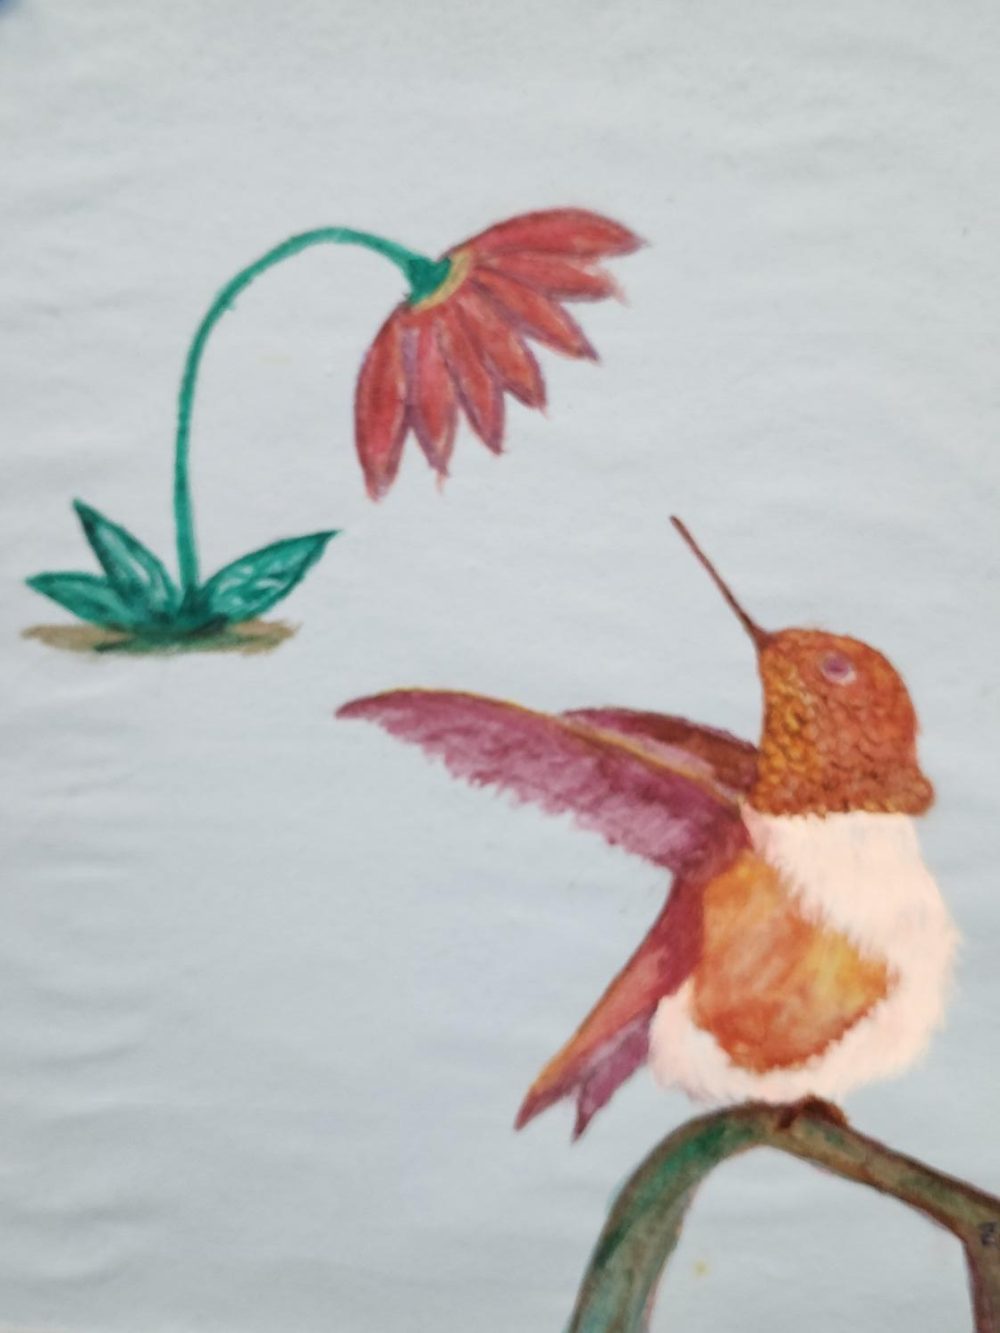 A watercolor image of a hummingbird.